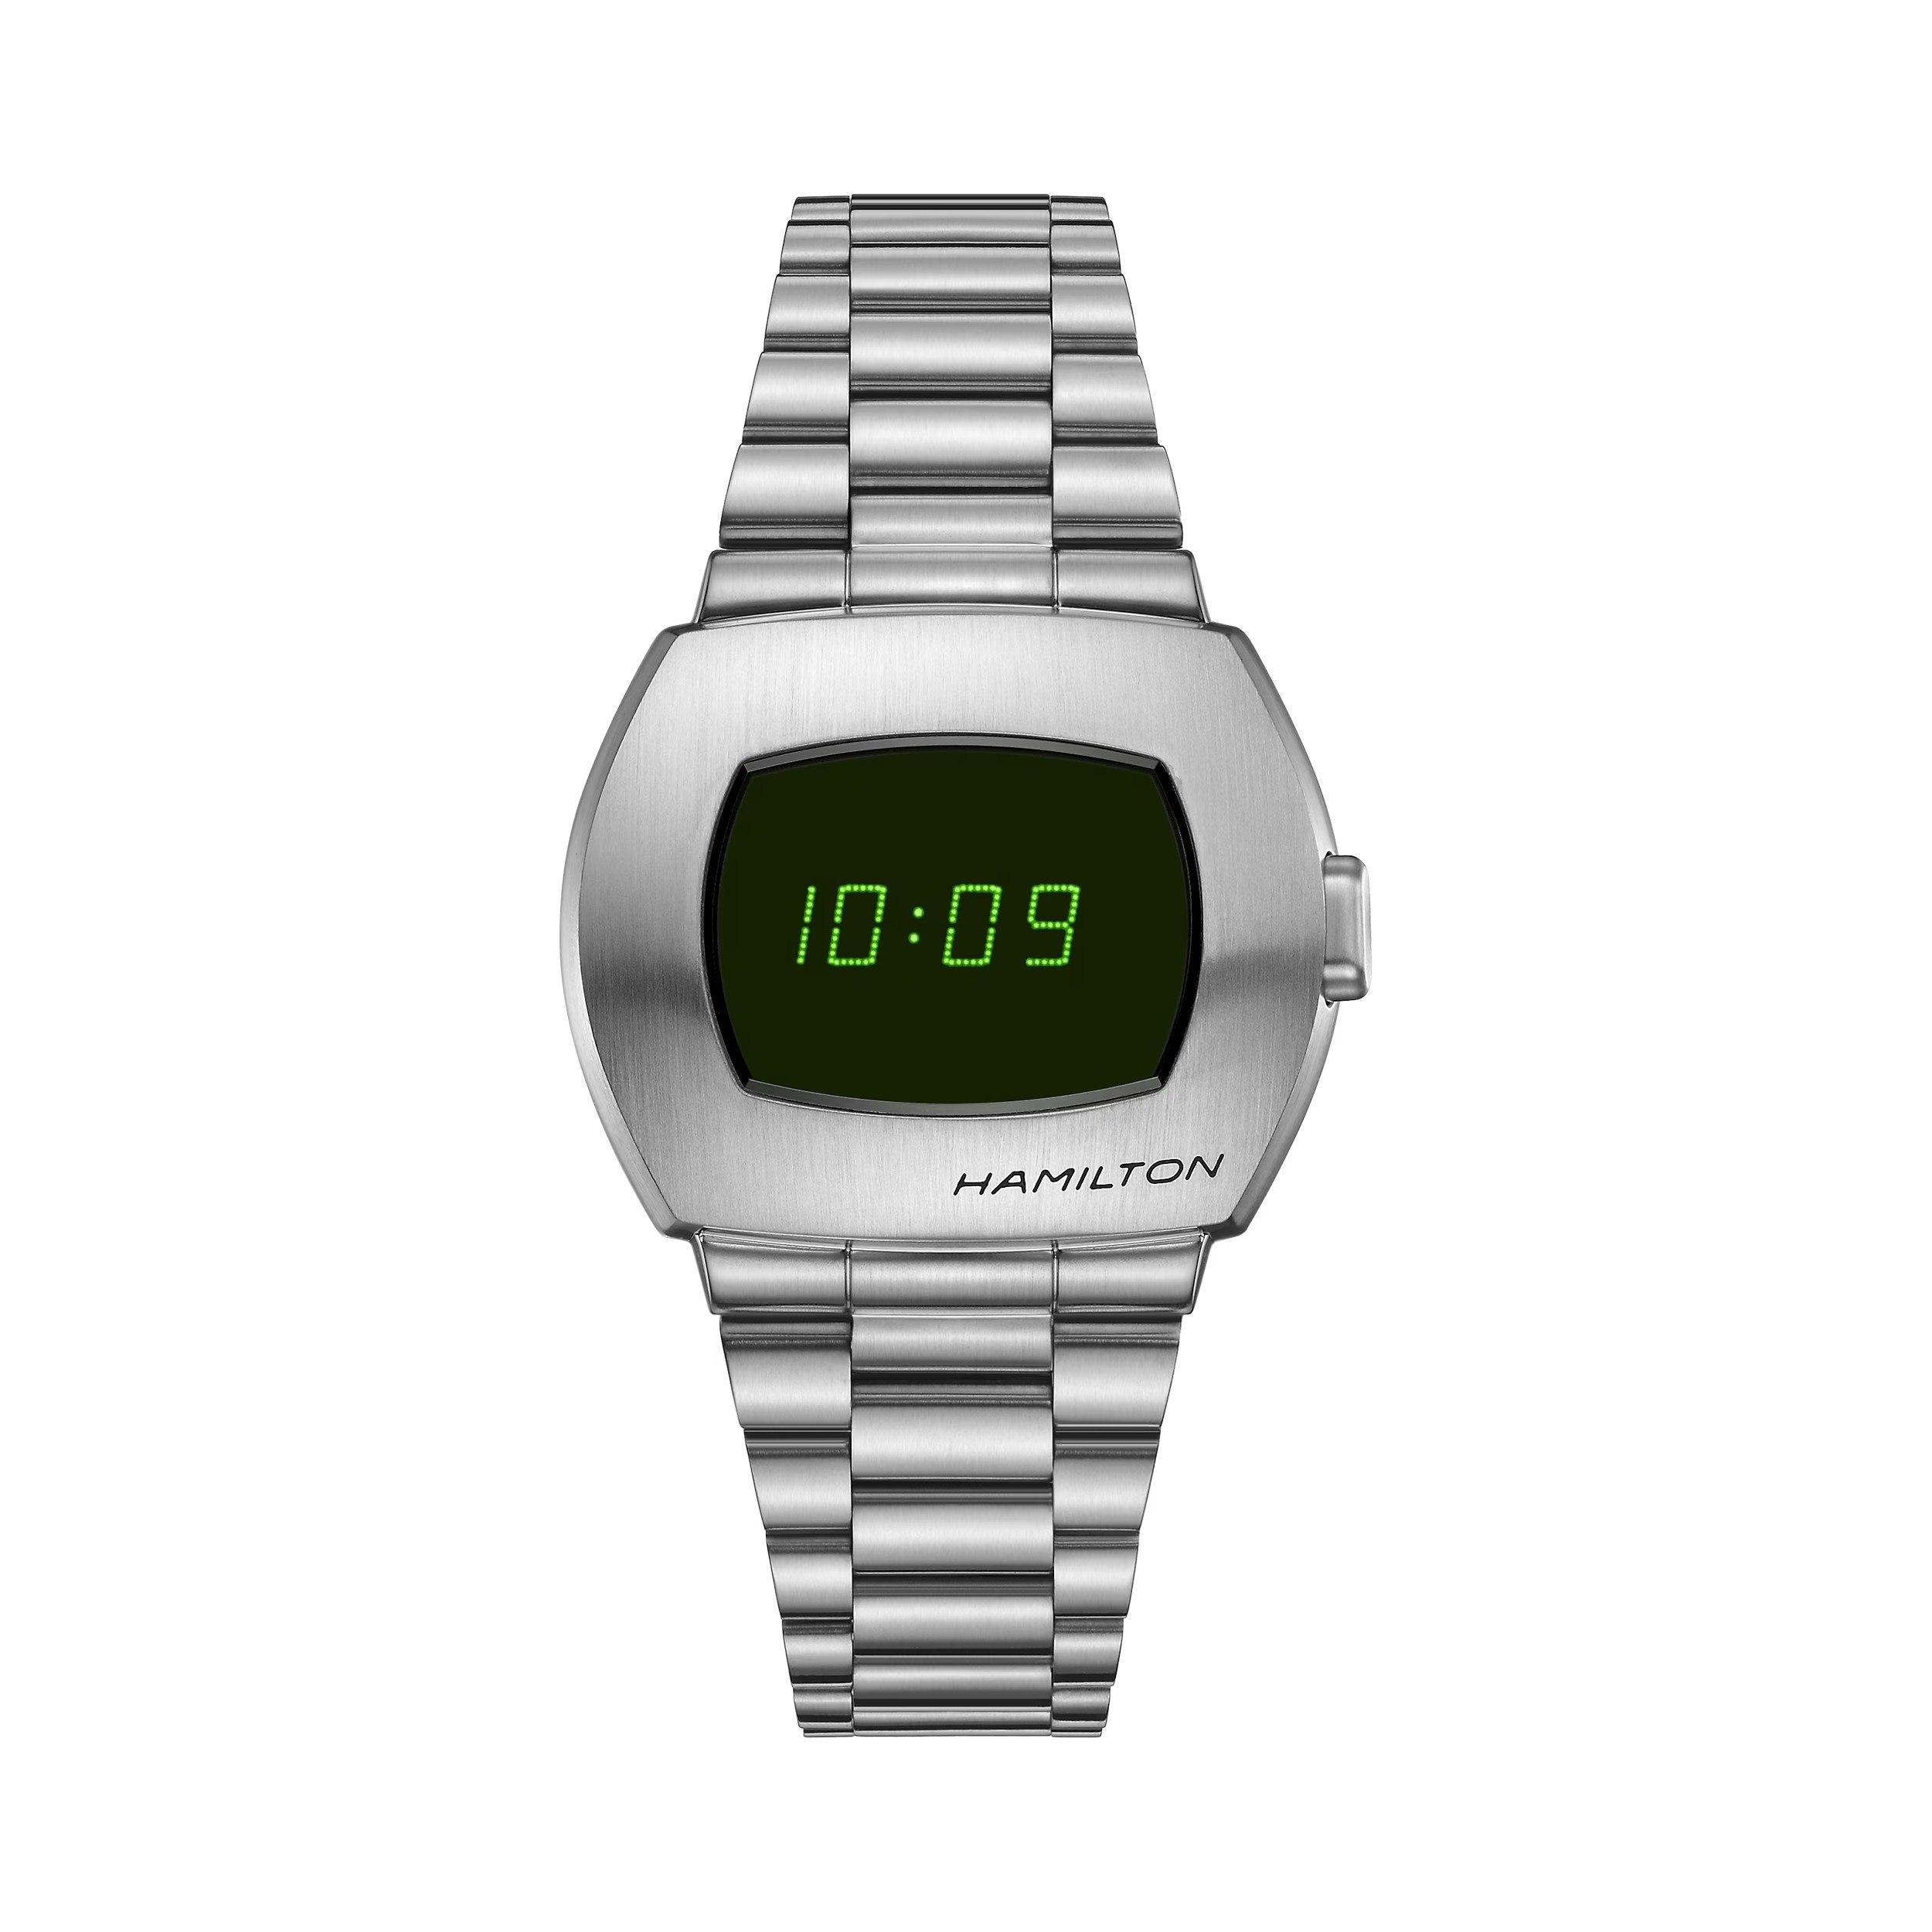 Hamilton American Classic PSR Digital Quartz Watch in Stainless Steel